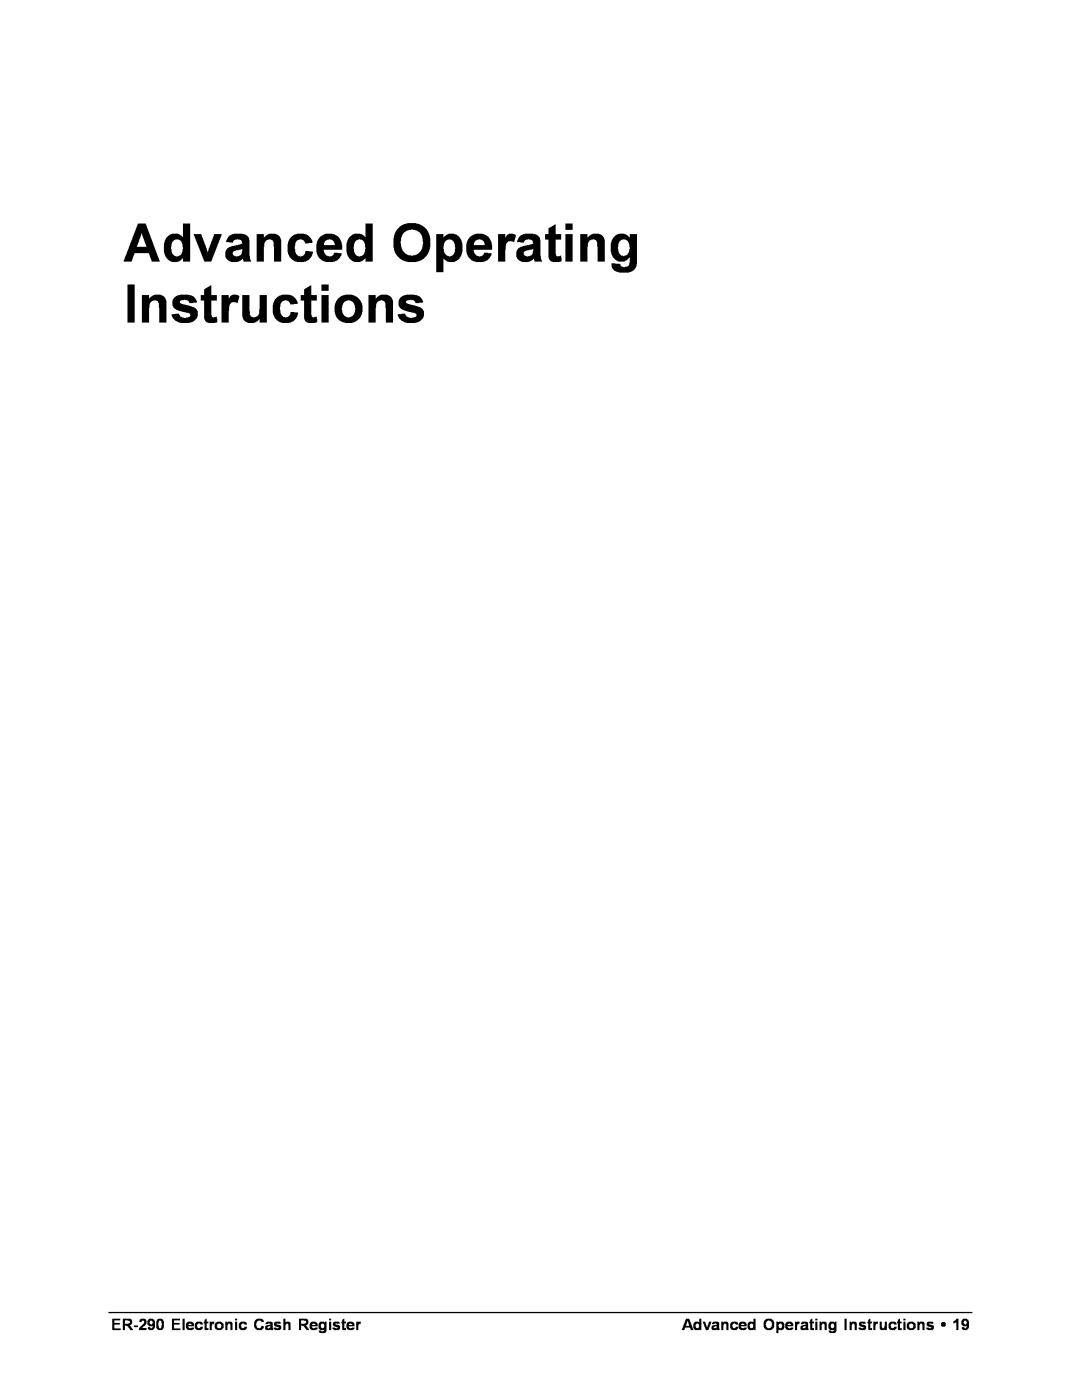 Samsung M-ER290 specifications Advanced Operating Instructions, ER-290 Electronic Cash Register 